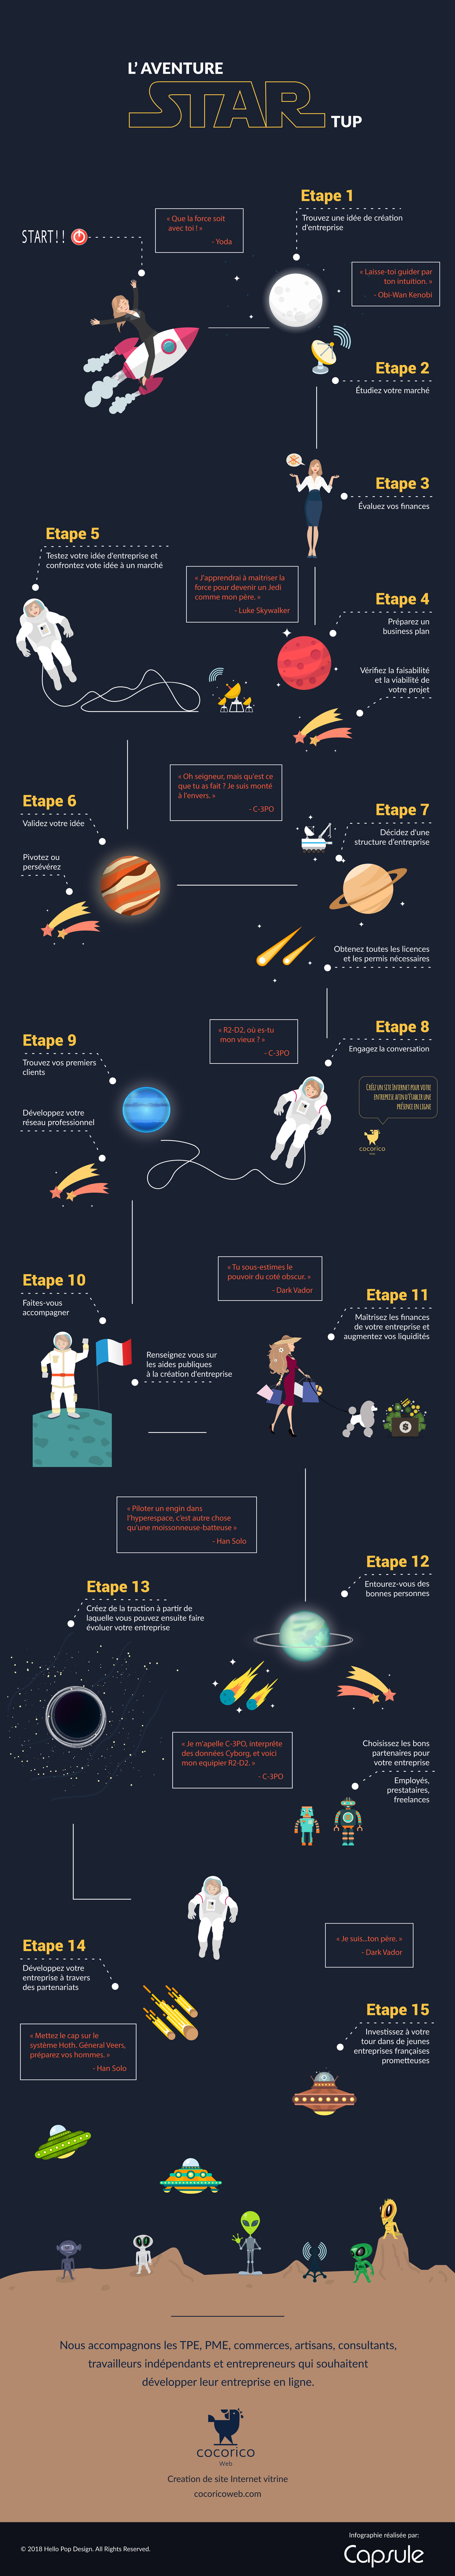 Infographic: The Startup Adventure - art